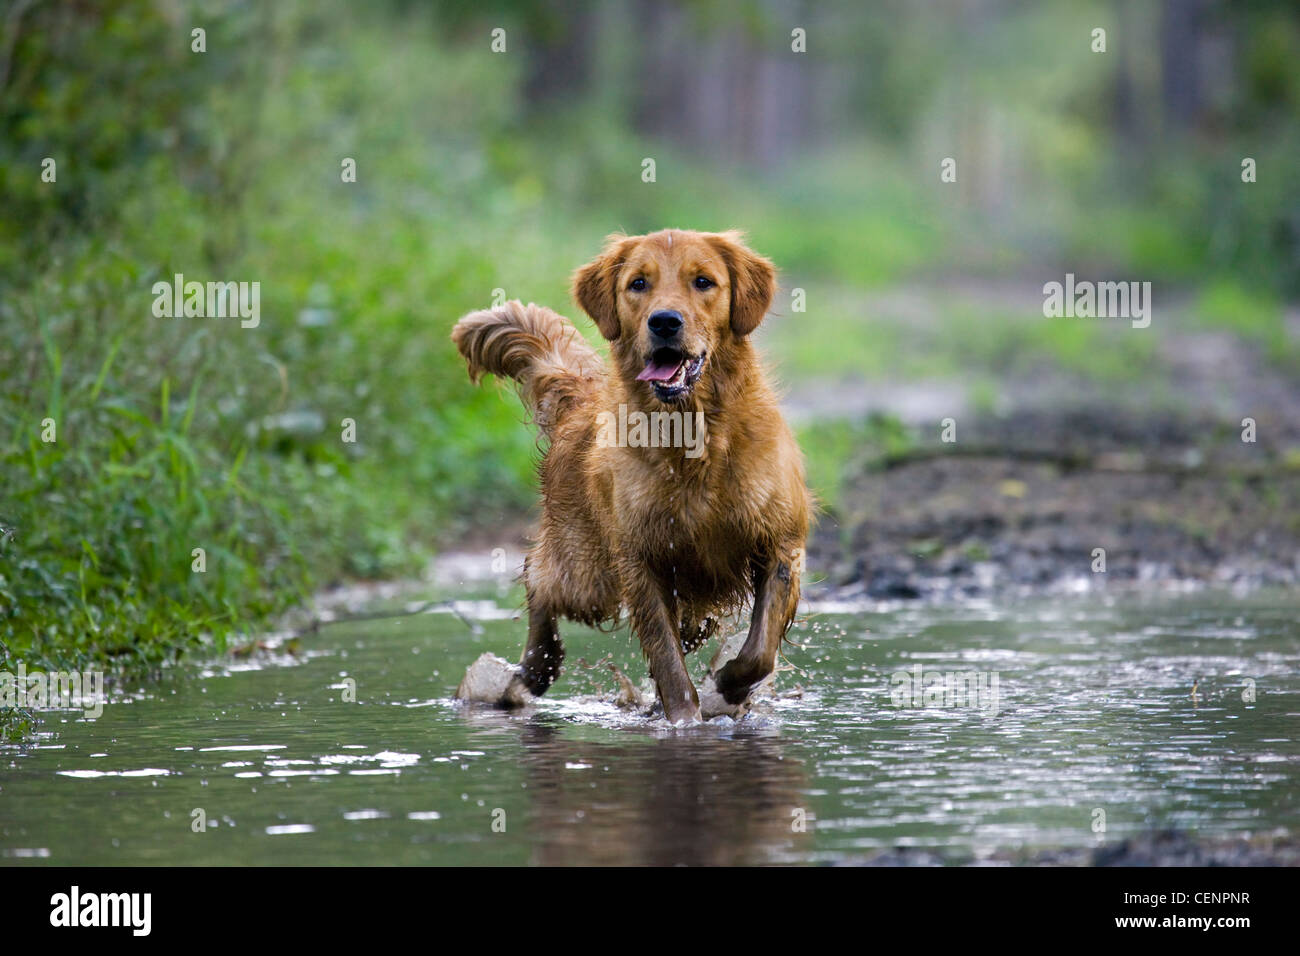 Golden retriever dog running through muddy puddle on forest track, Belgium Stock Photo